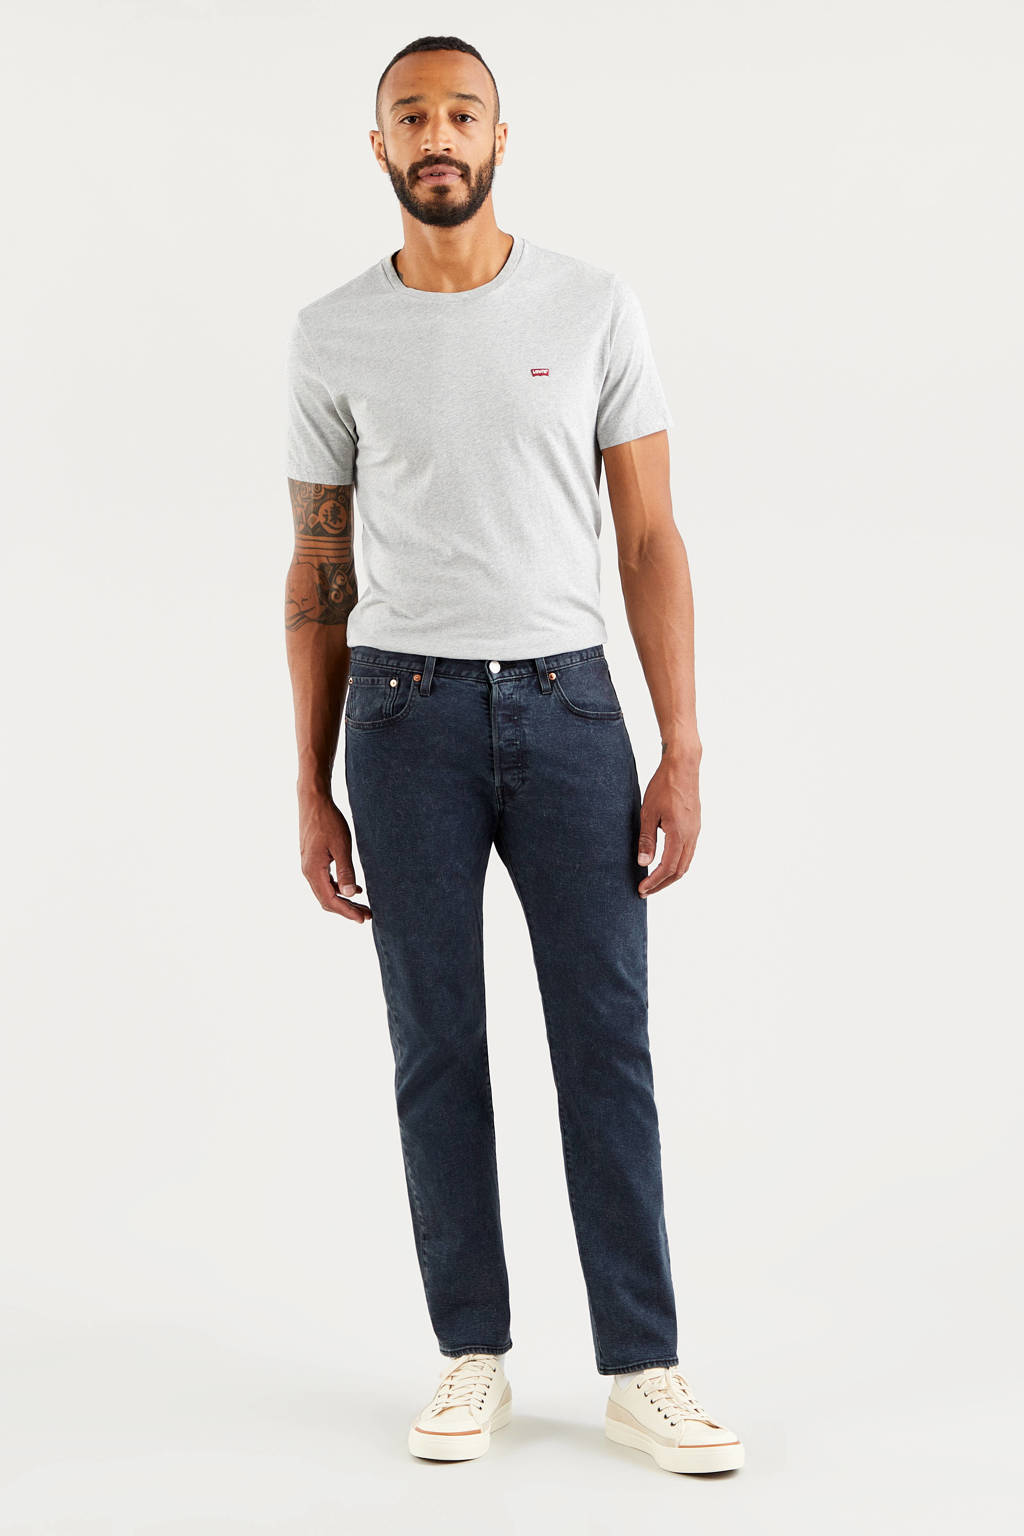 Levi's 501 regular fit jeans cash only